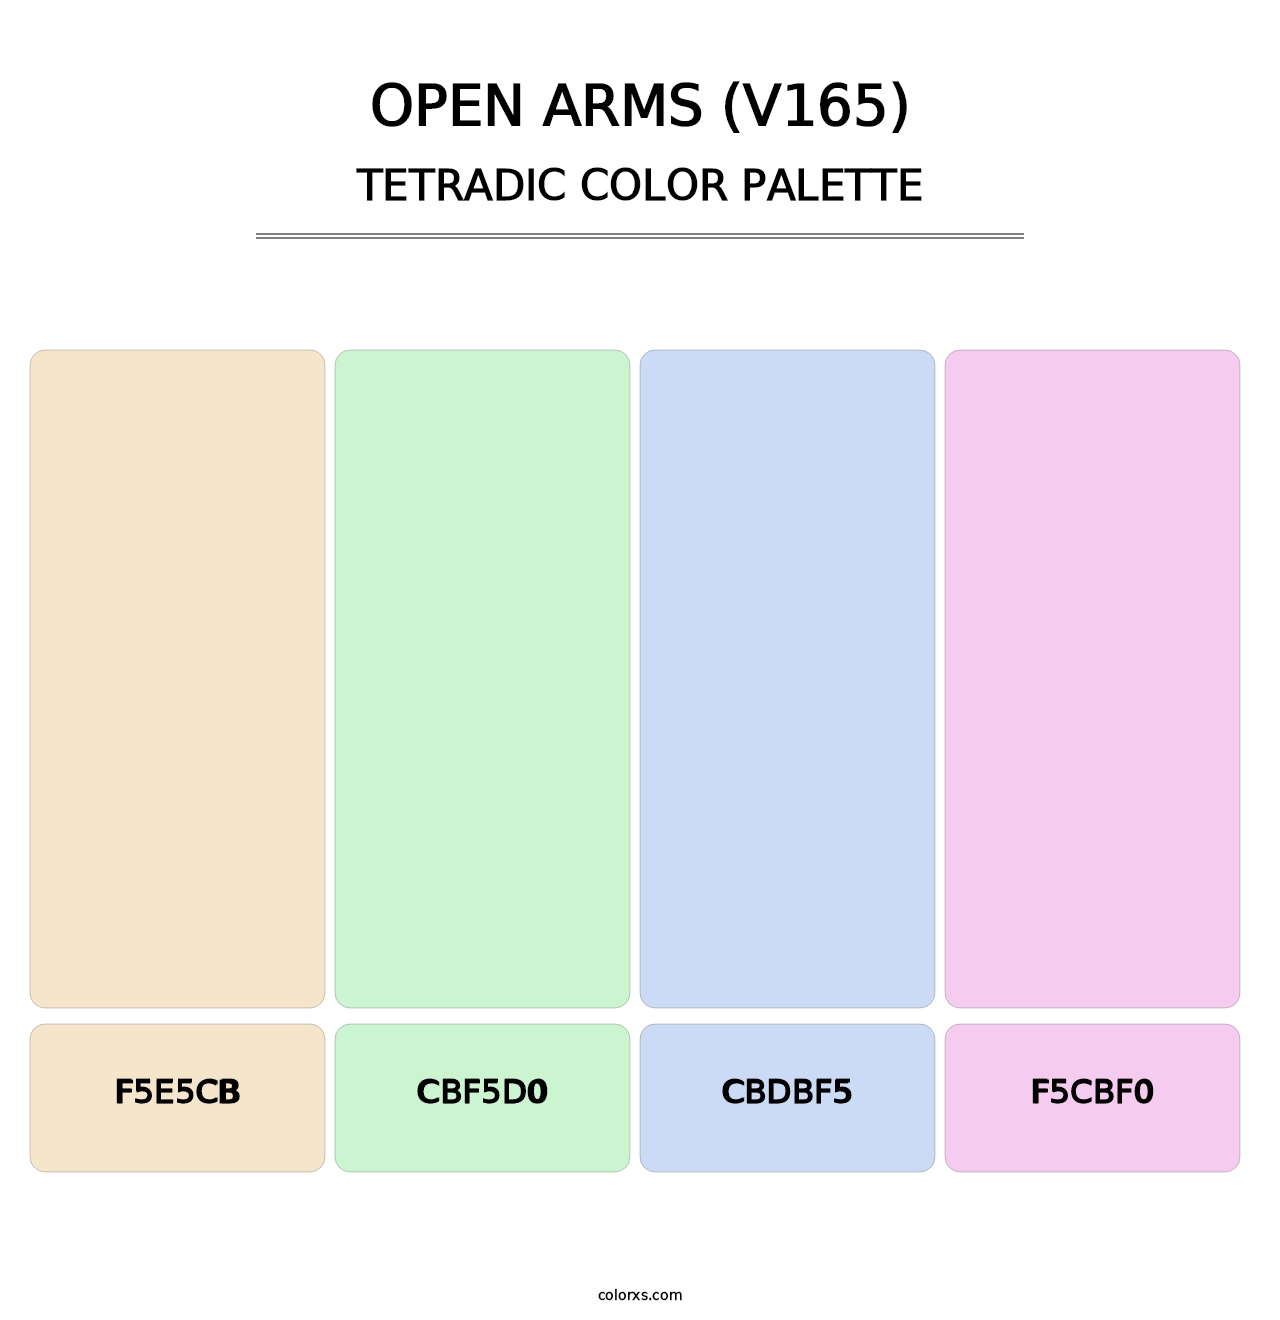 Open Arms (V165) - Tetradic Color Palette